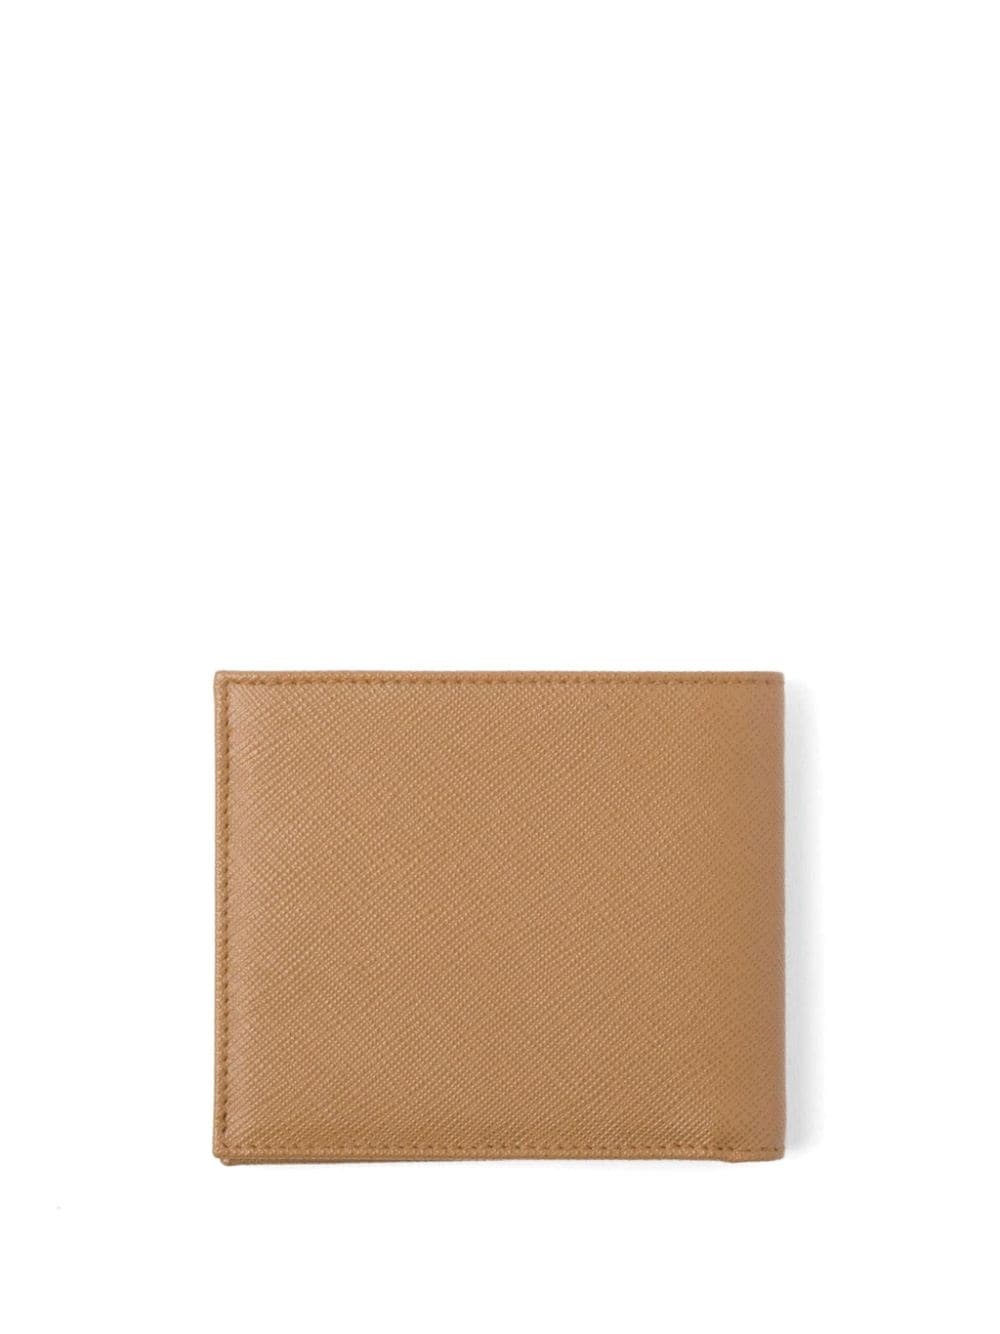 Saffiano leather bi-fold wallet - 2